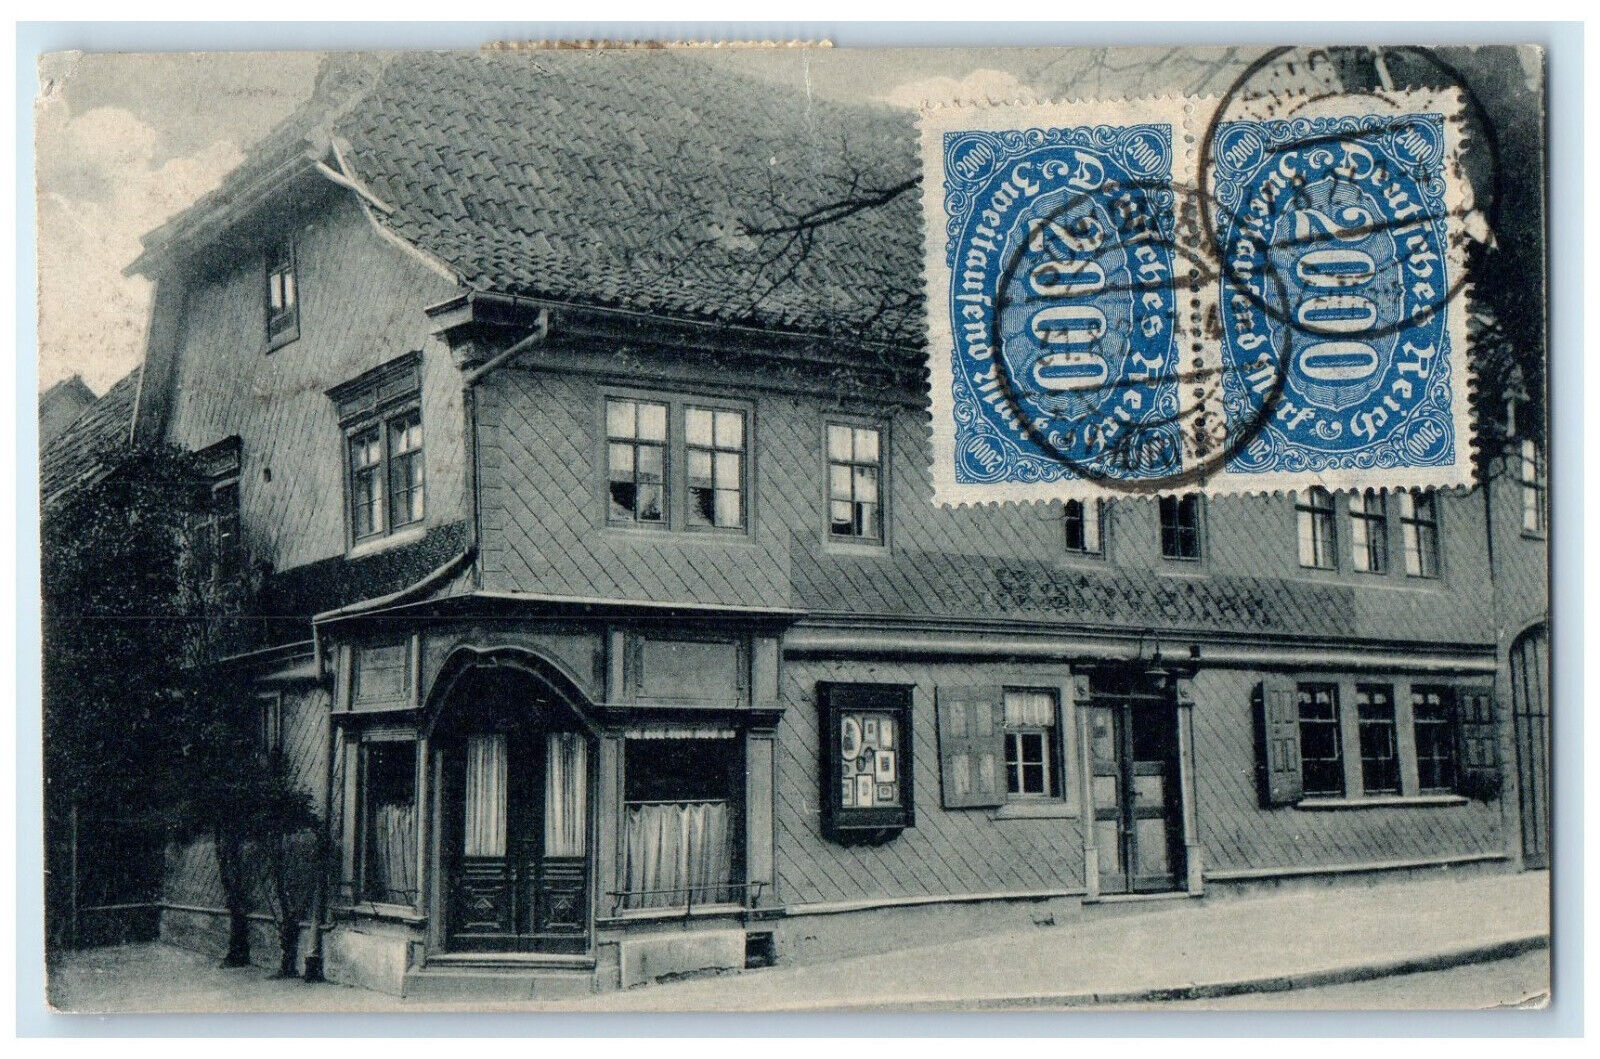 1923 Schlotheim Ratskeller Inh Berthold Heuck Thuringia Germany Postcard